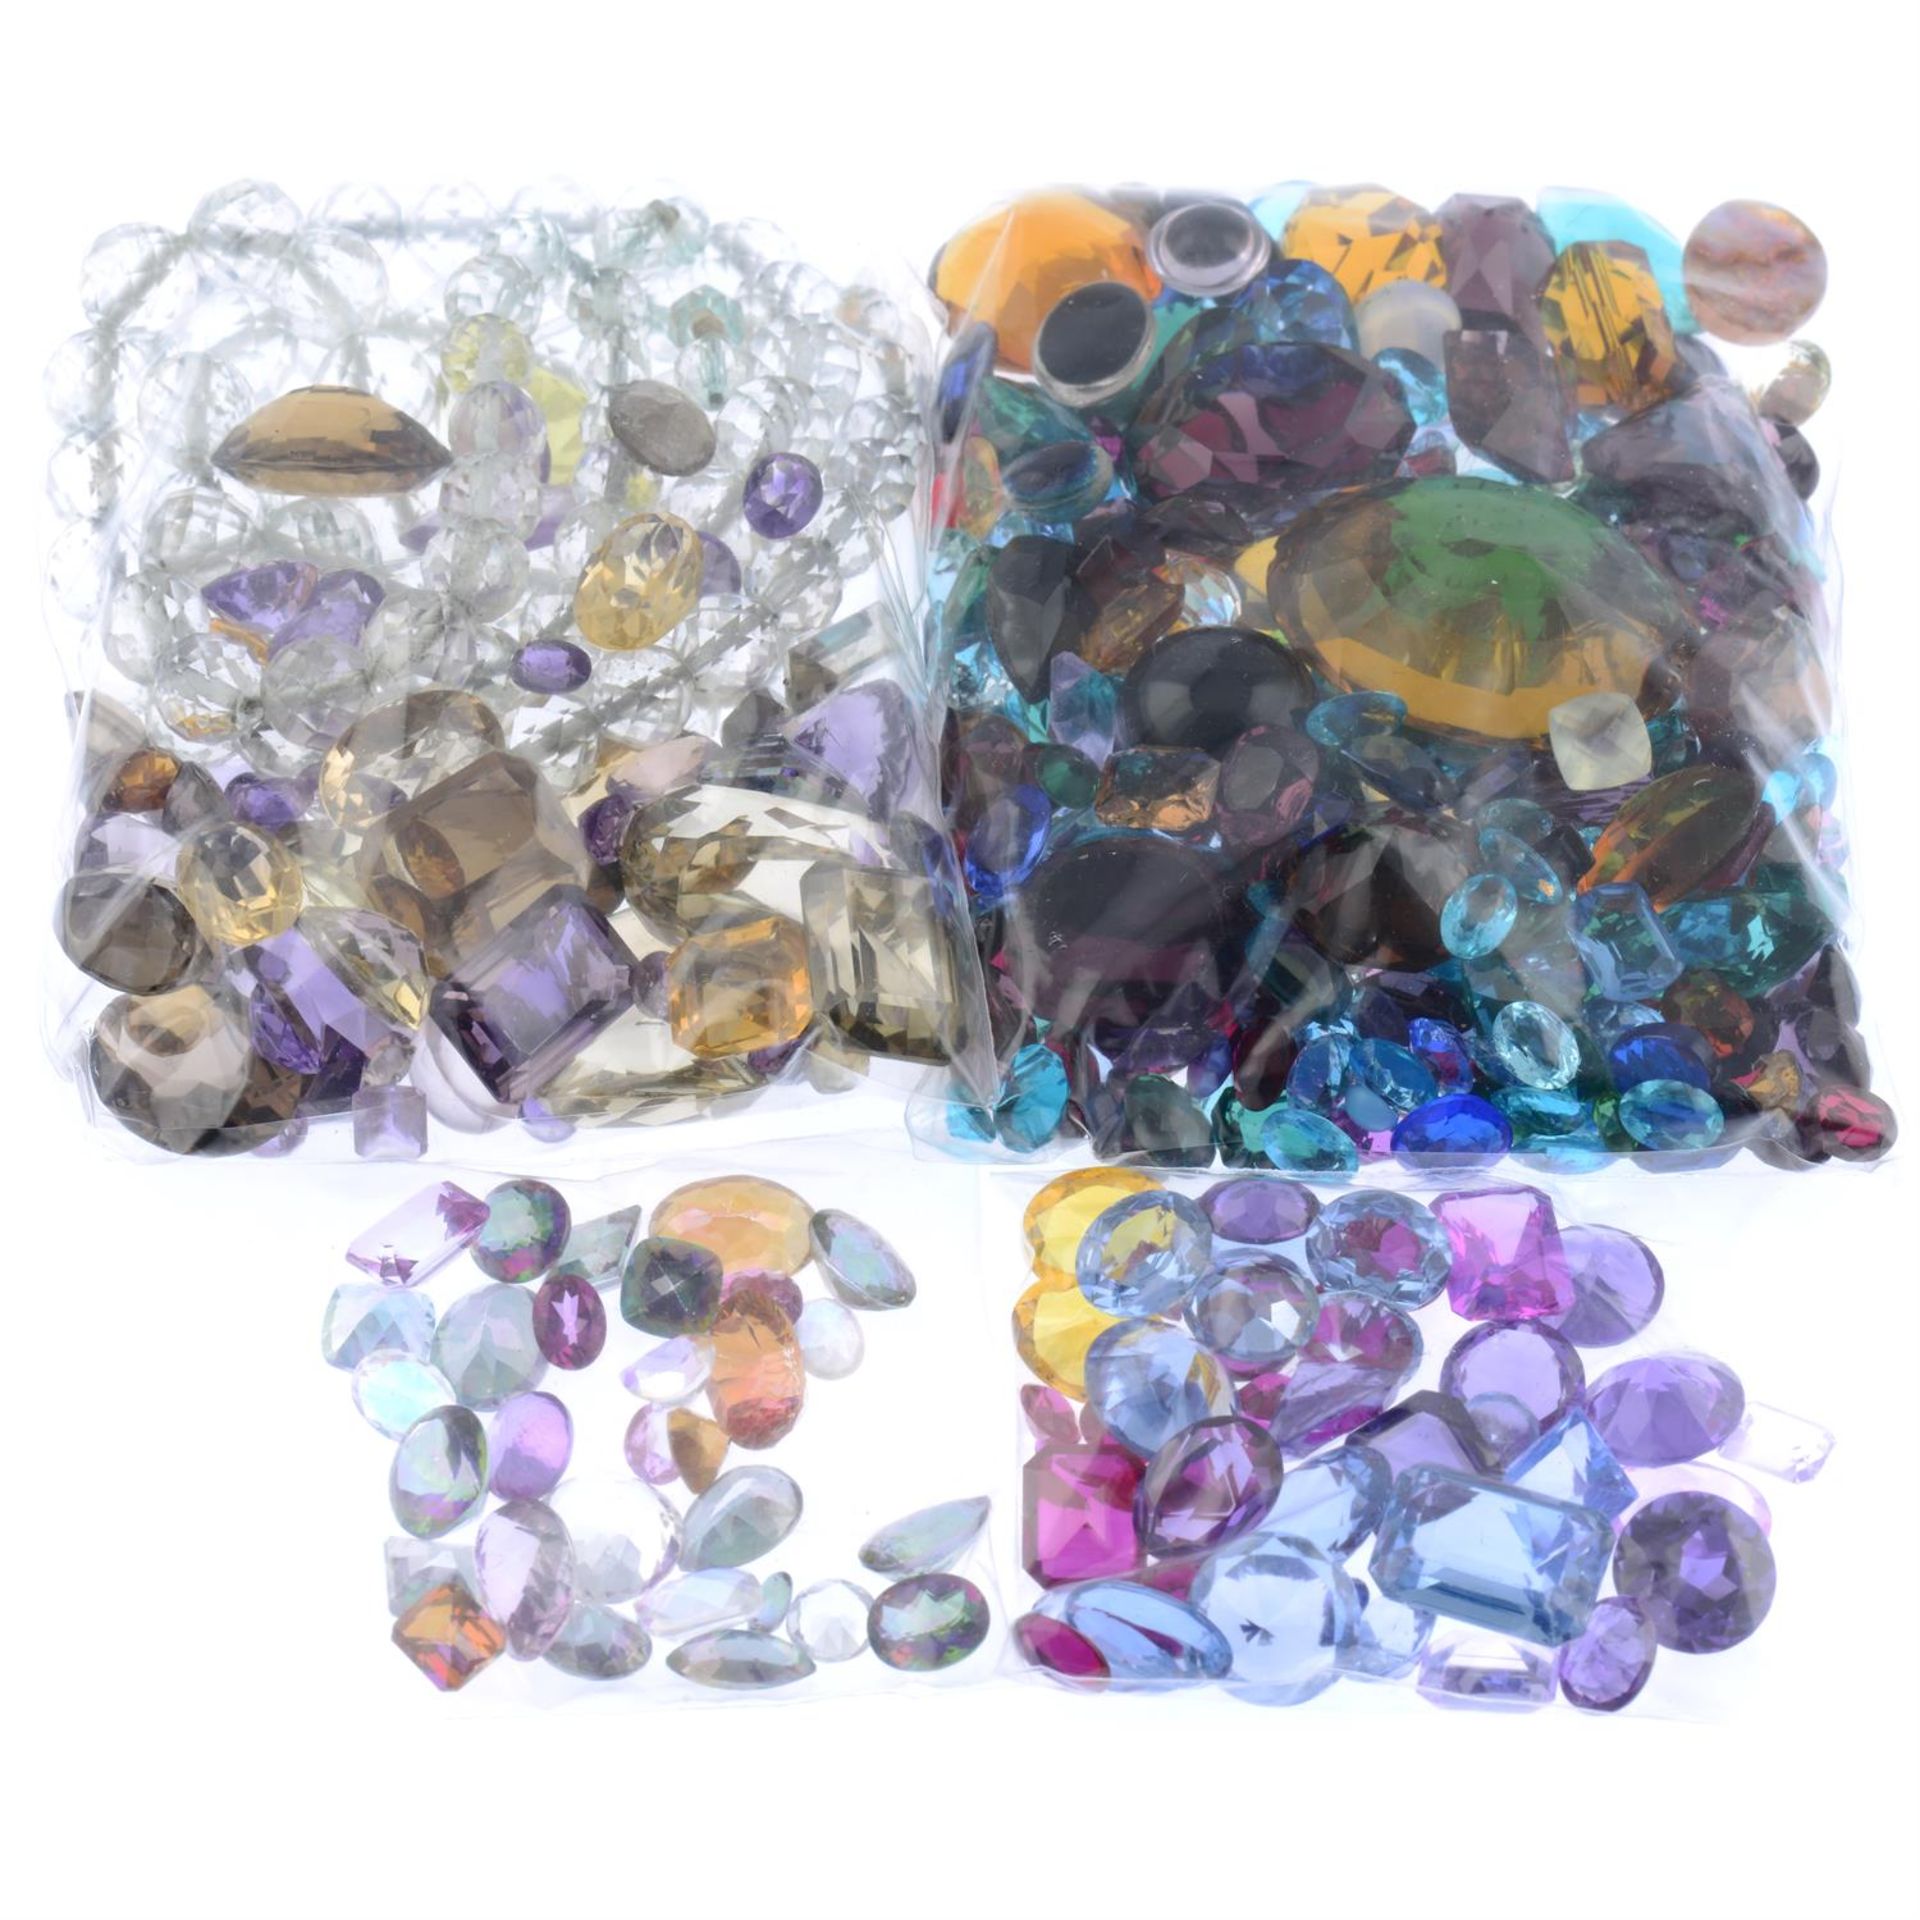 Assorted gemstones, 465g